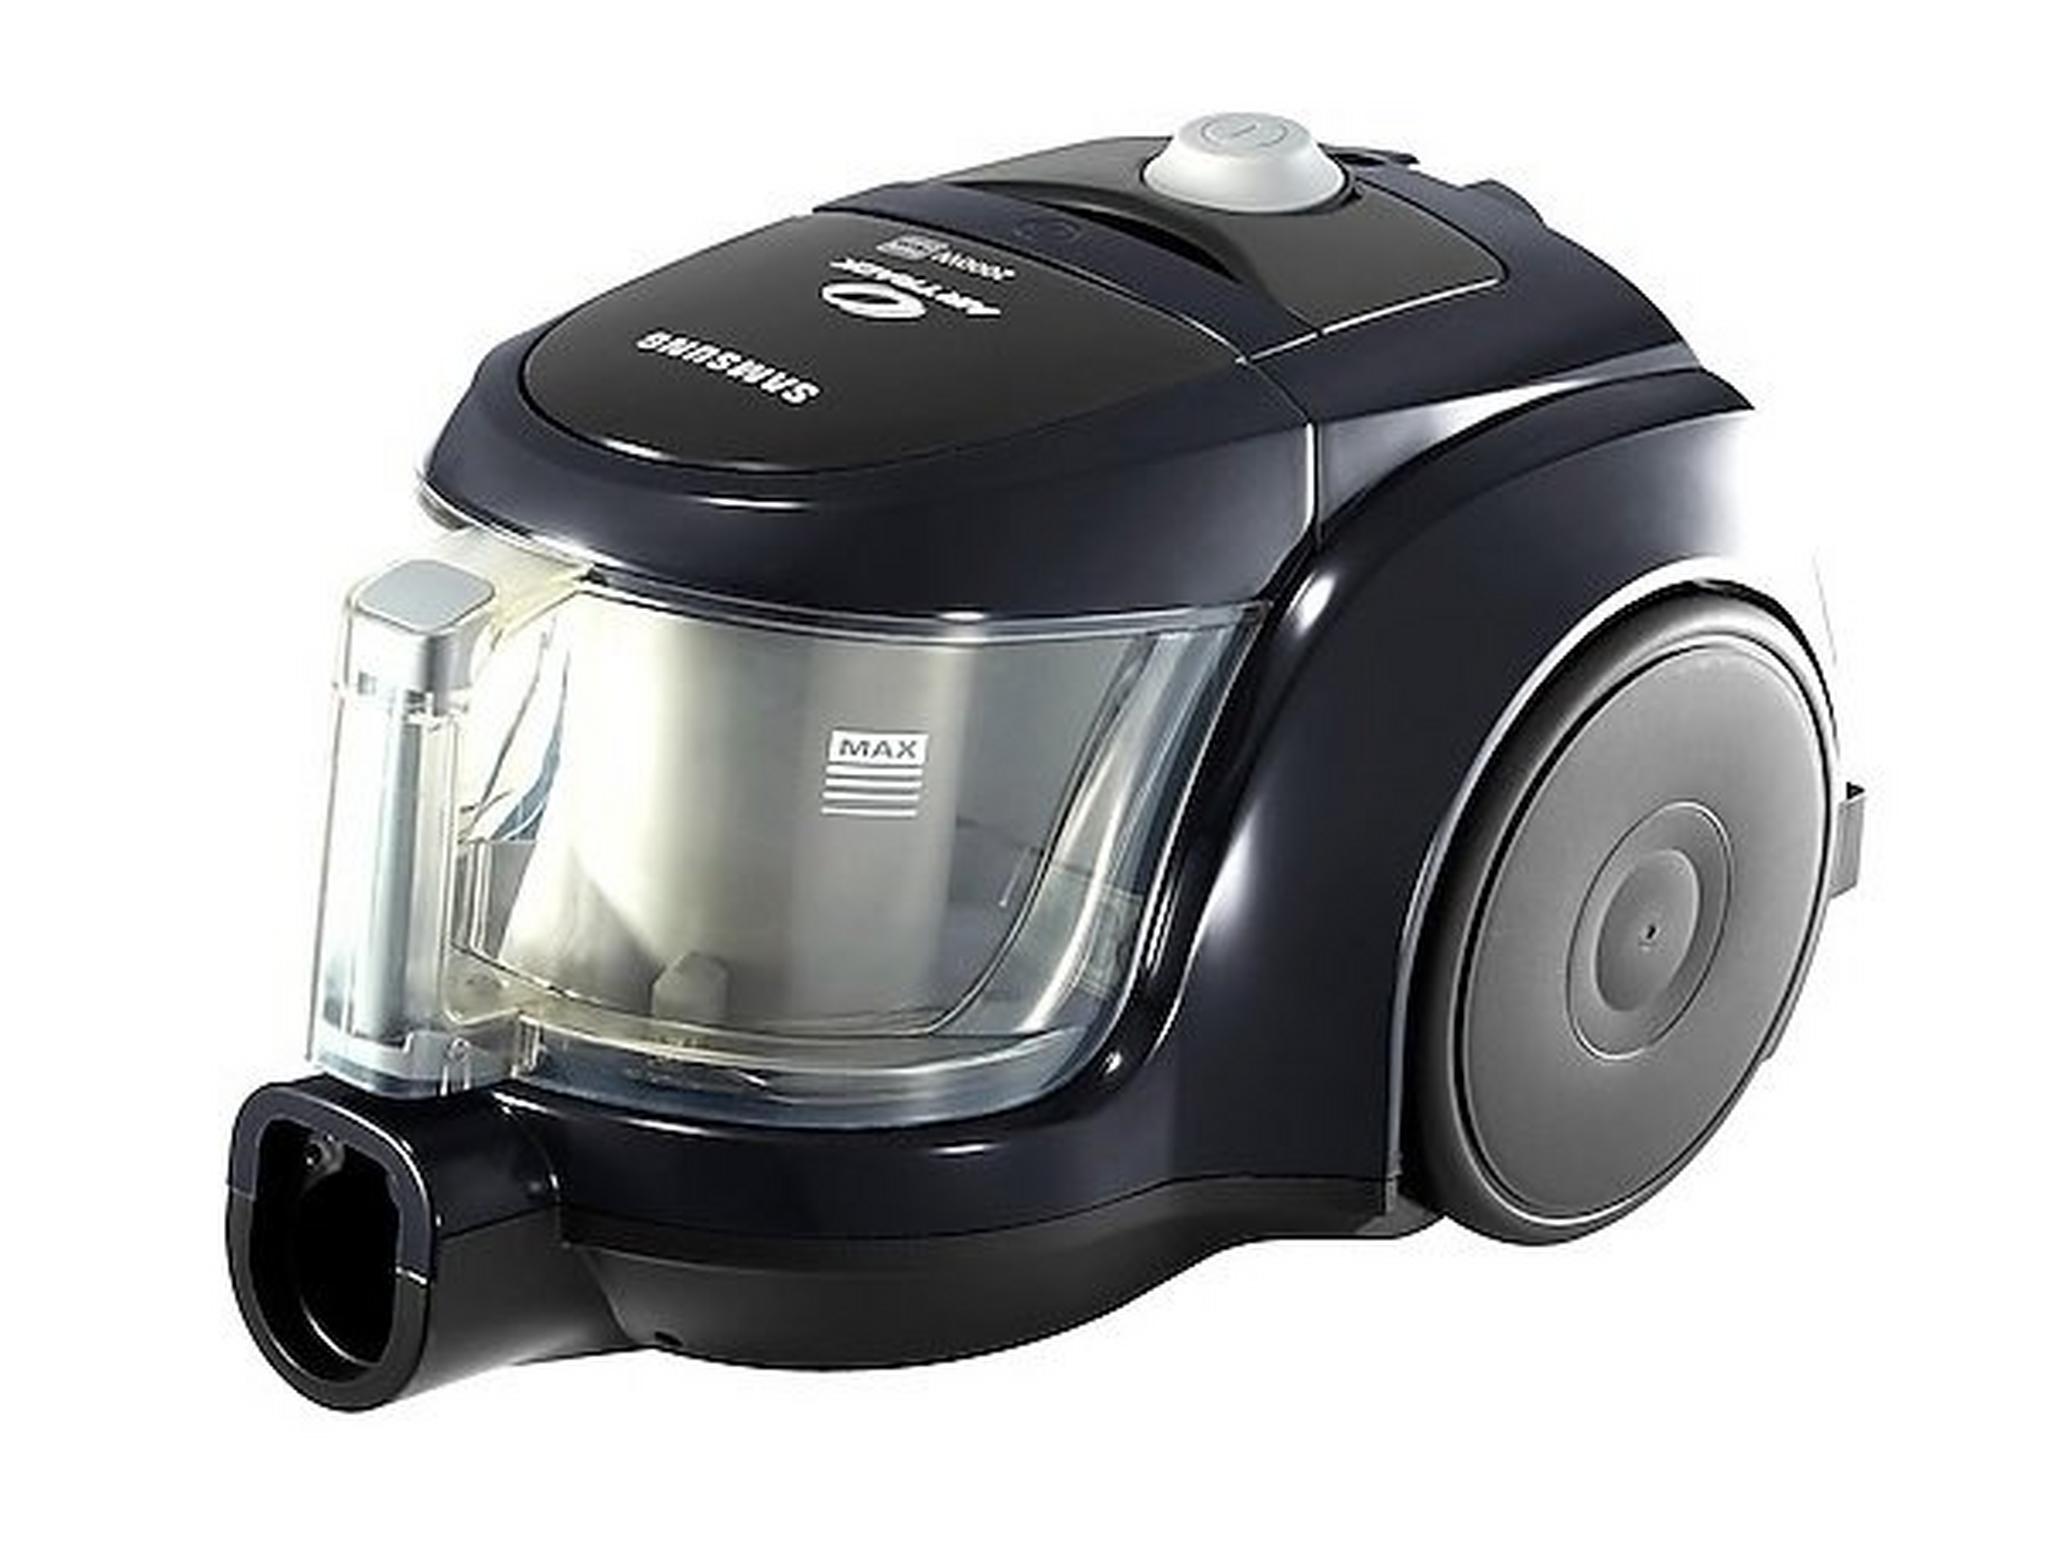 Samsung Bagless Vacuum Cleaner, 2000W, 1.3Liters, VCC4570S4K - Black